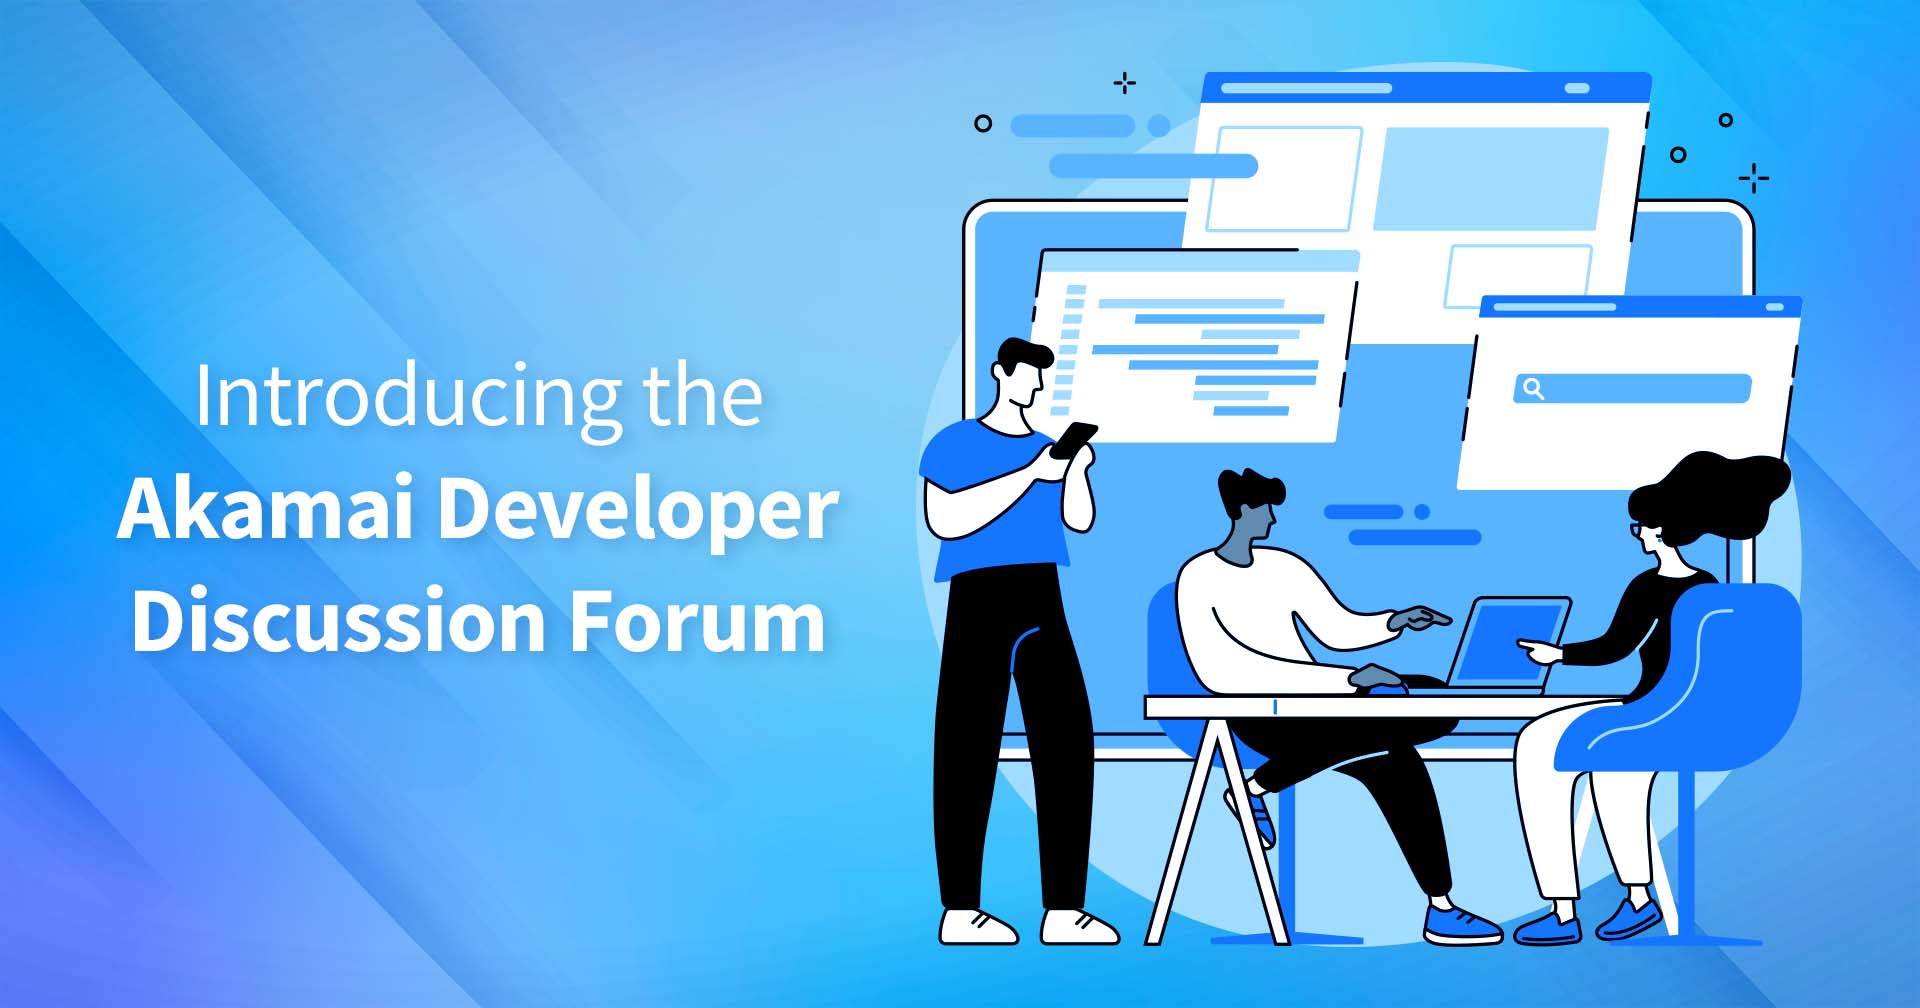 Presentazione del forum di discussione per sviluppatori Akamai.